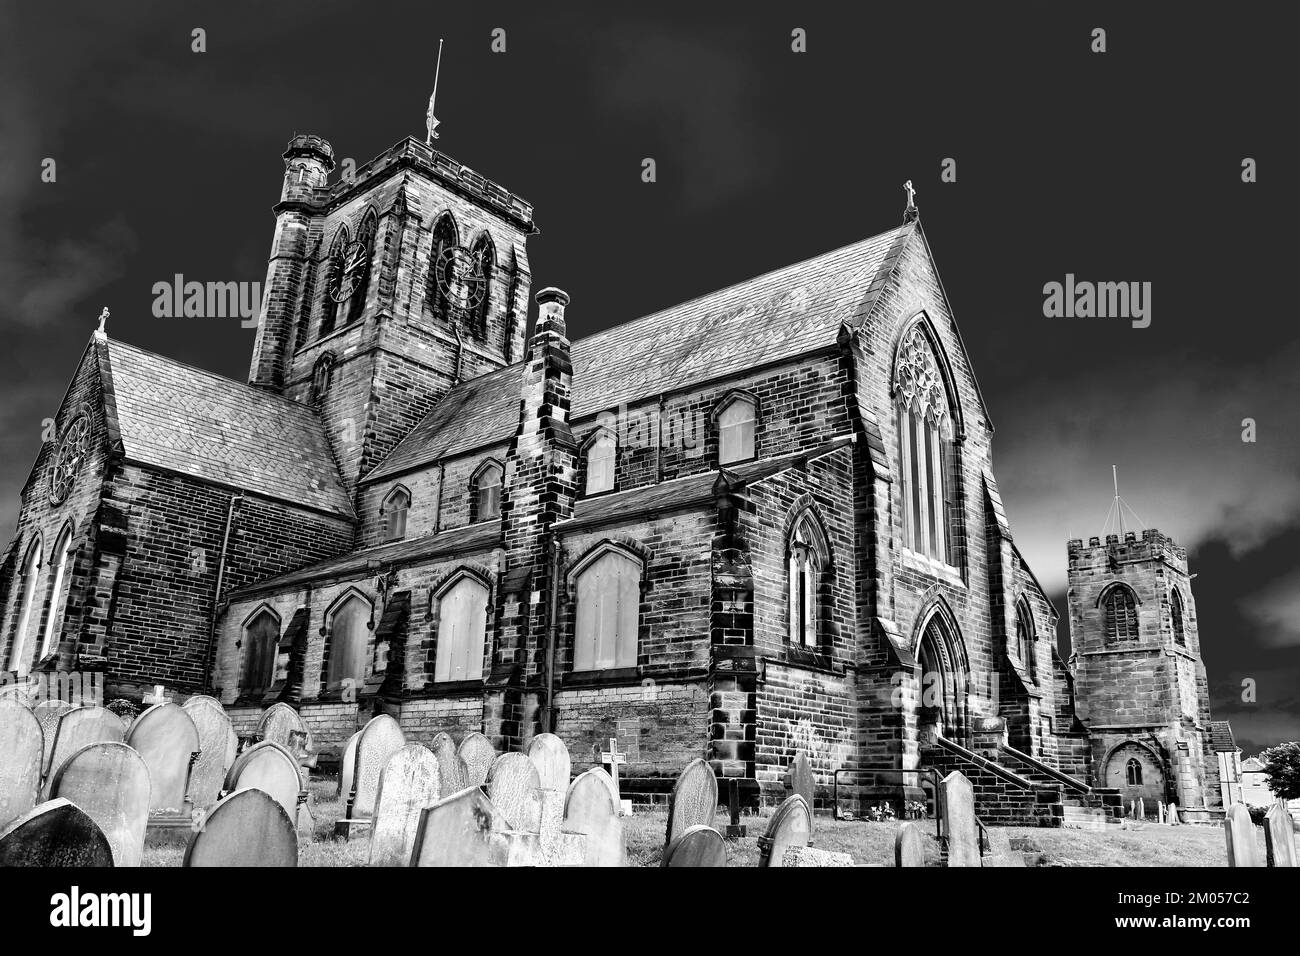 St Hilary's Church, Wallasey, Wirral, UK - black & White Stock Photo